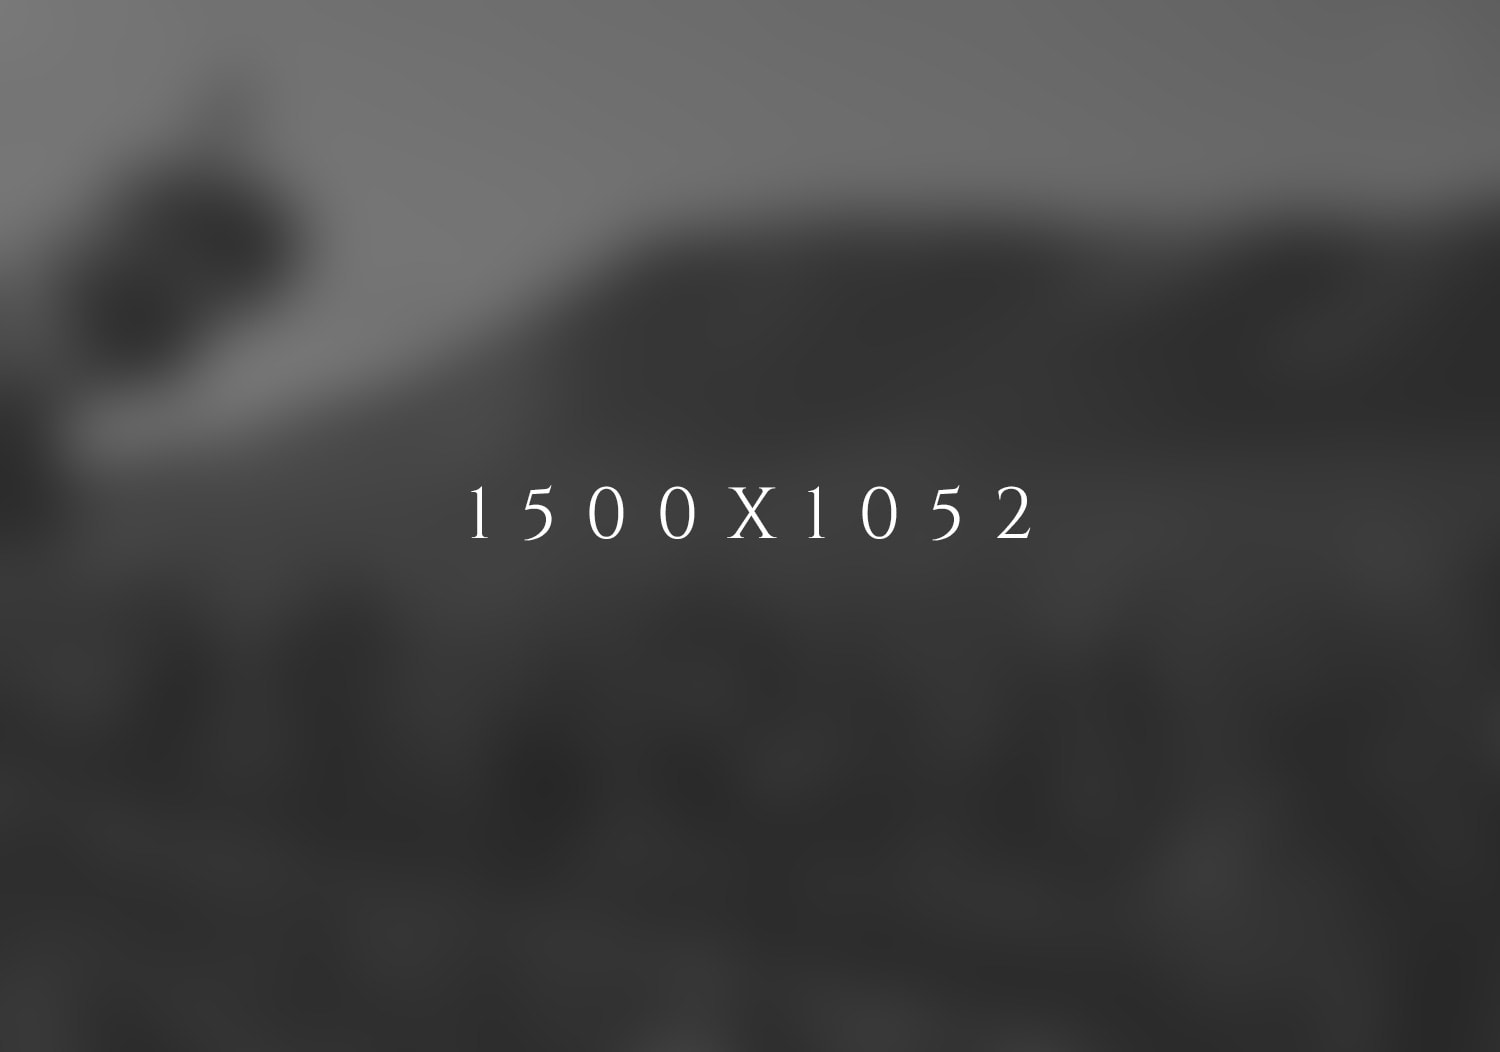 1500x1052-min - Copy (15).jpg